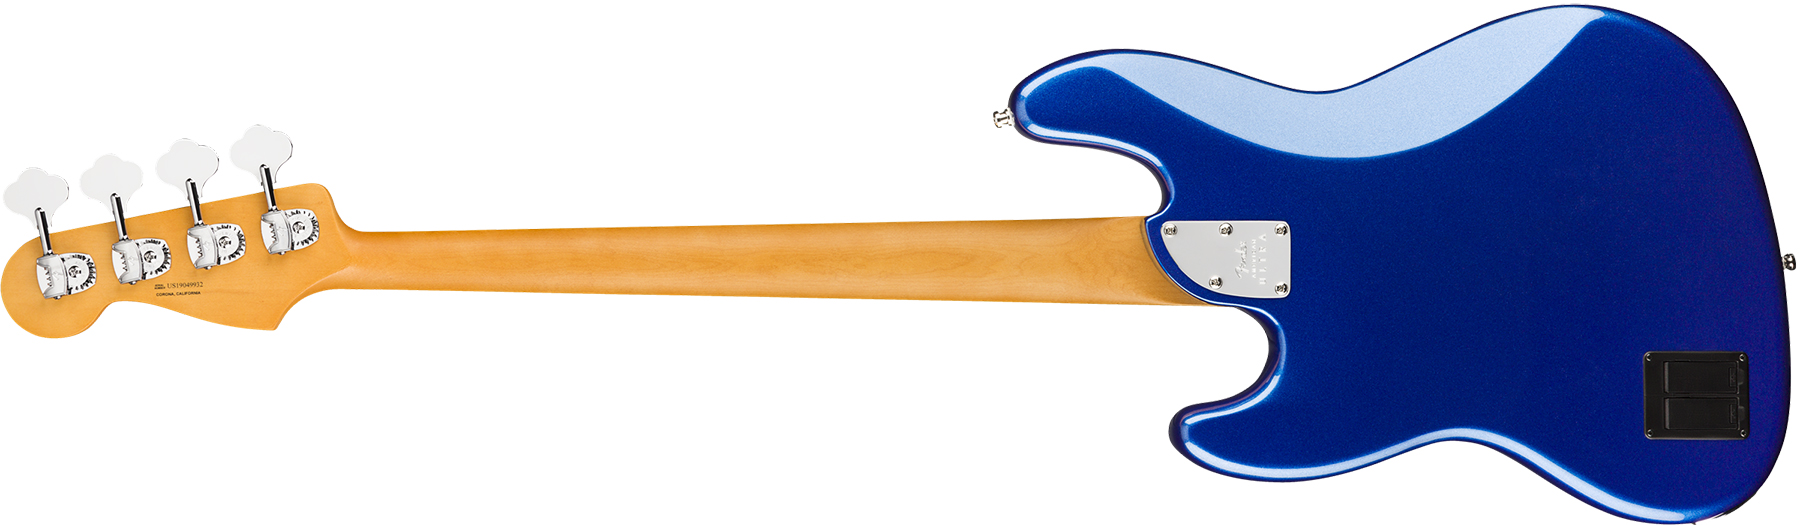 Fender Jazz Bass American Ultra 2019 Usa Mn - Cobra Blue - Basse Électrique Solid Body - Variation 1